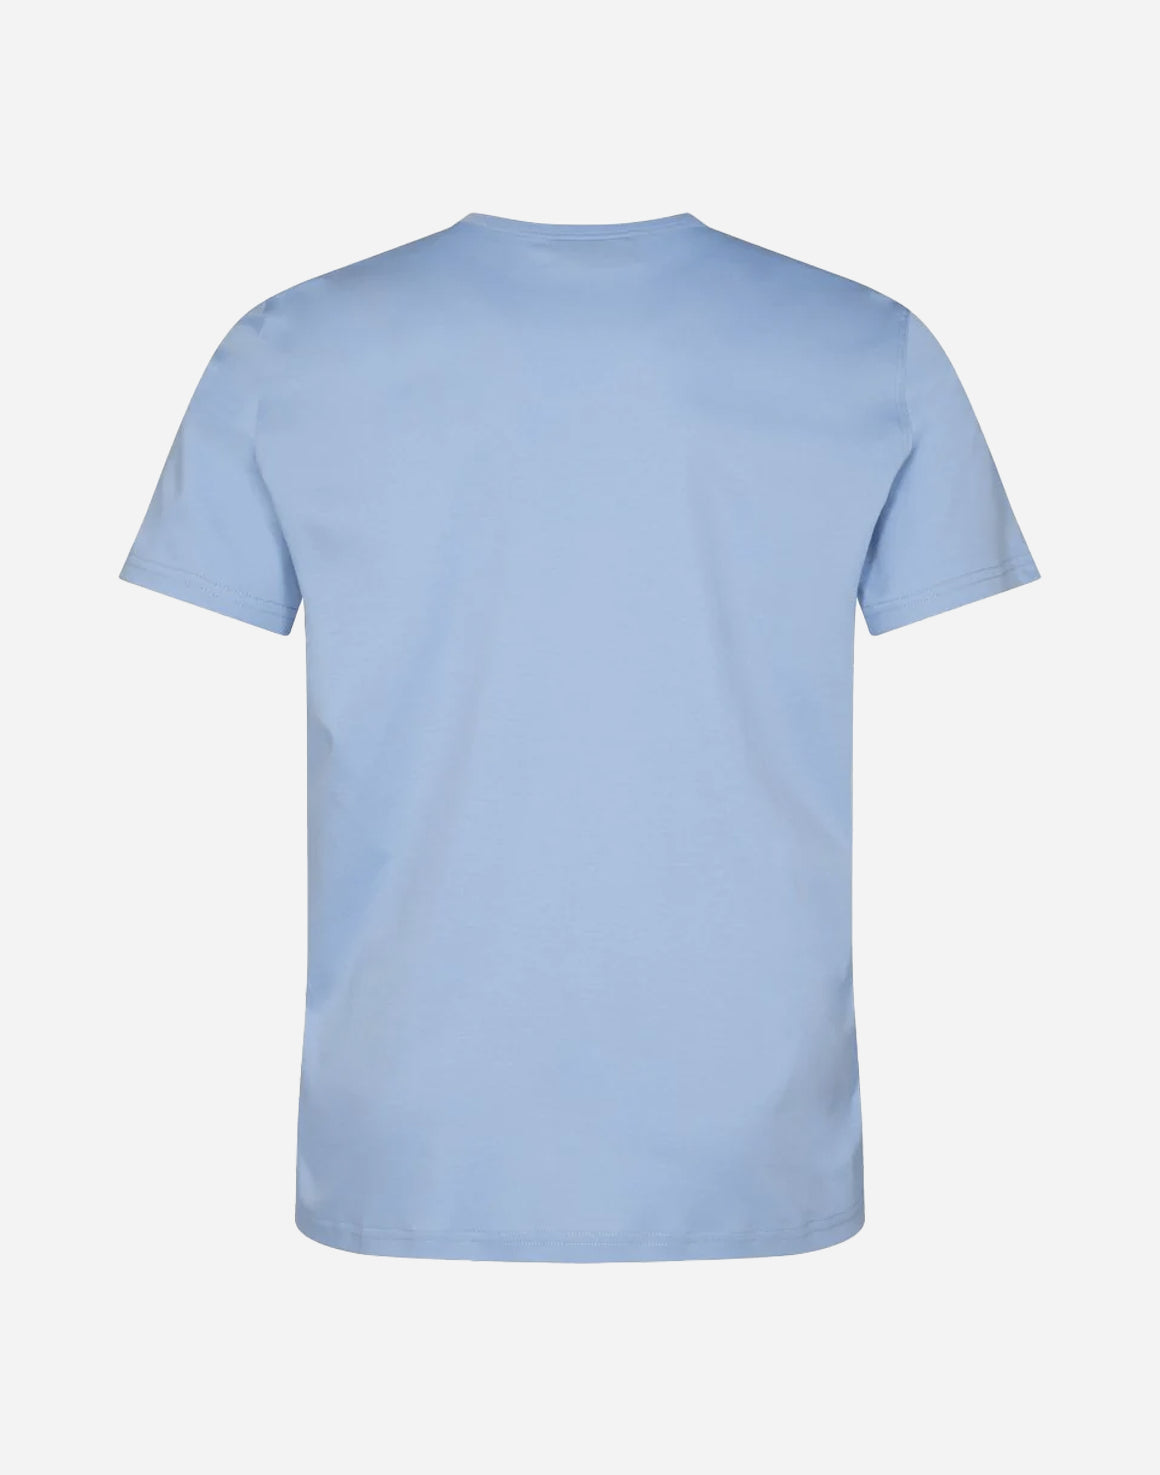 Perry T-shirt - Lys Blå - Mos Mosh Gallery - Kul og Koks